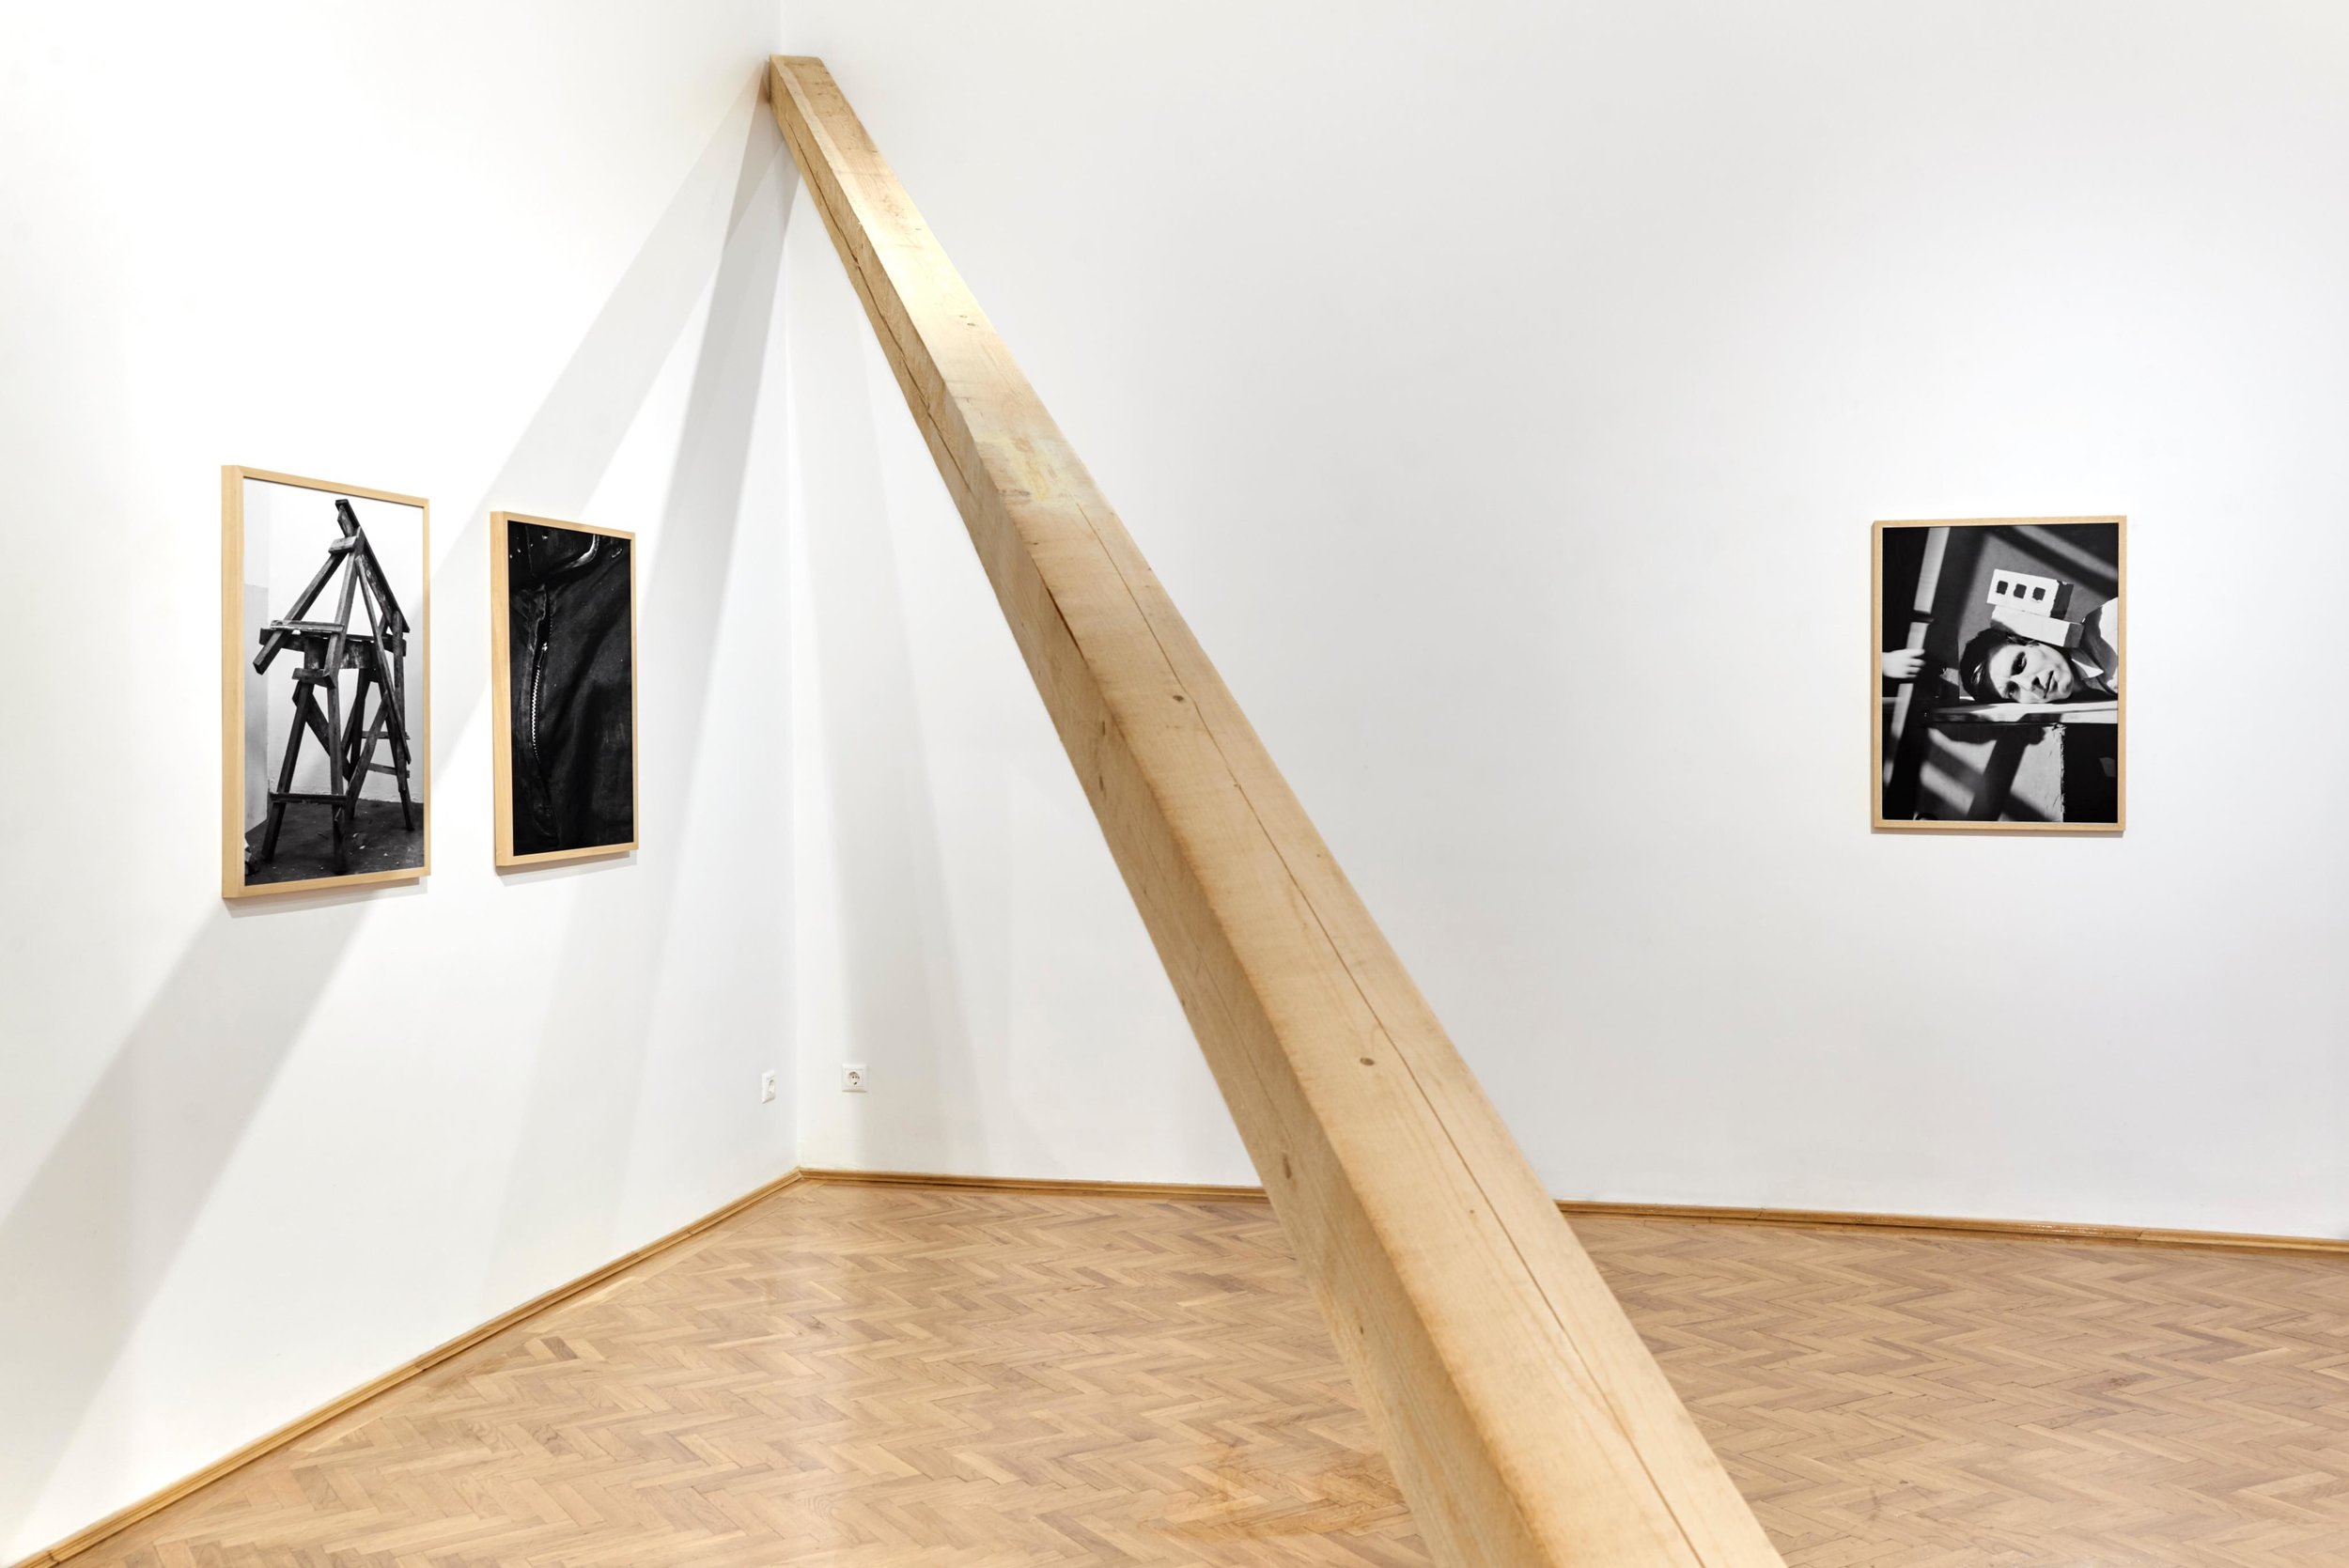 exhibition view, photo: Imre Kiss